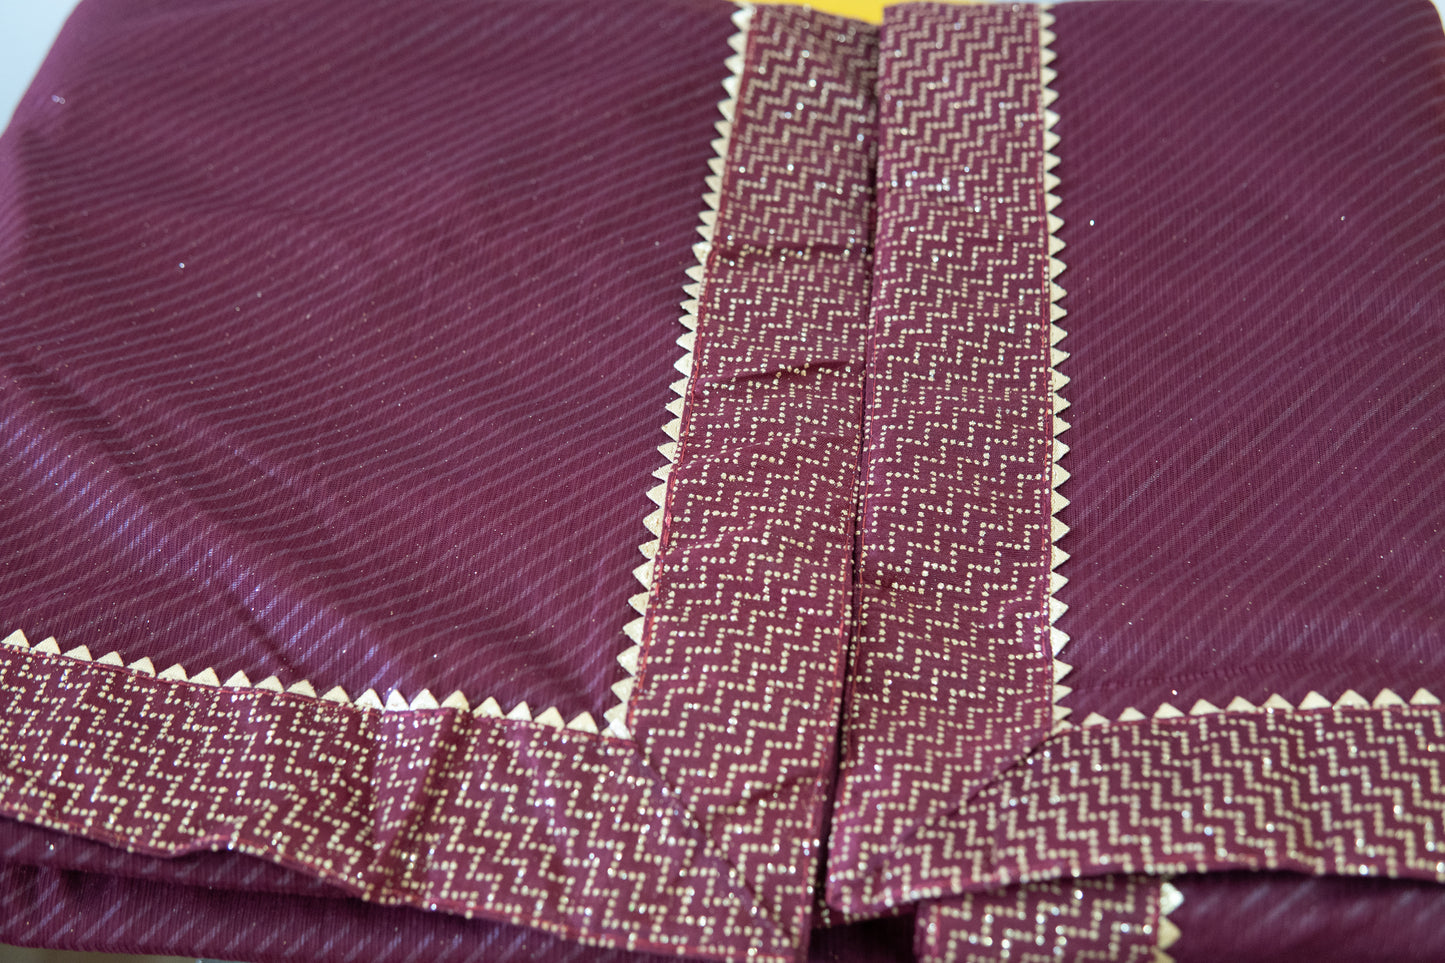 Classic Crimson Cotton Saree with Geometric Patterned Border